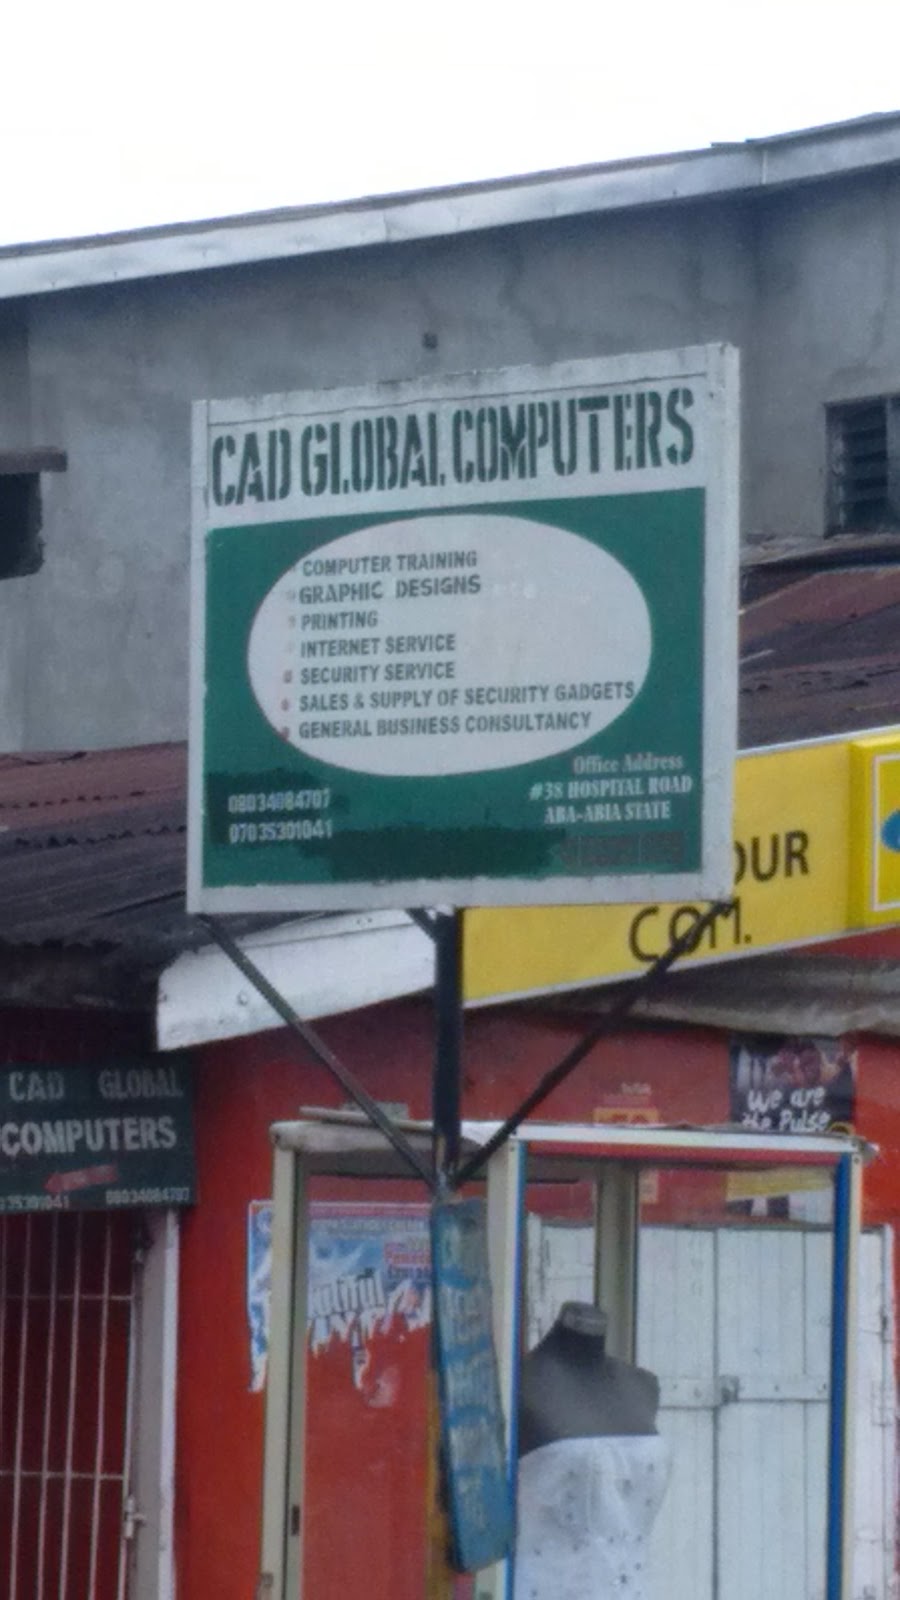 Cad Global Computers